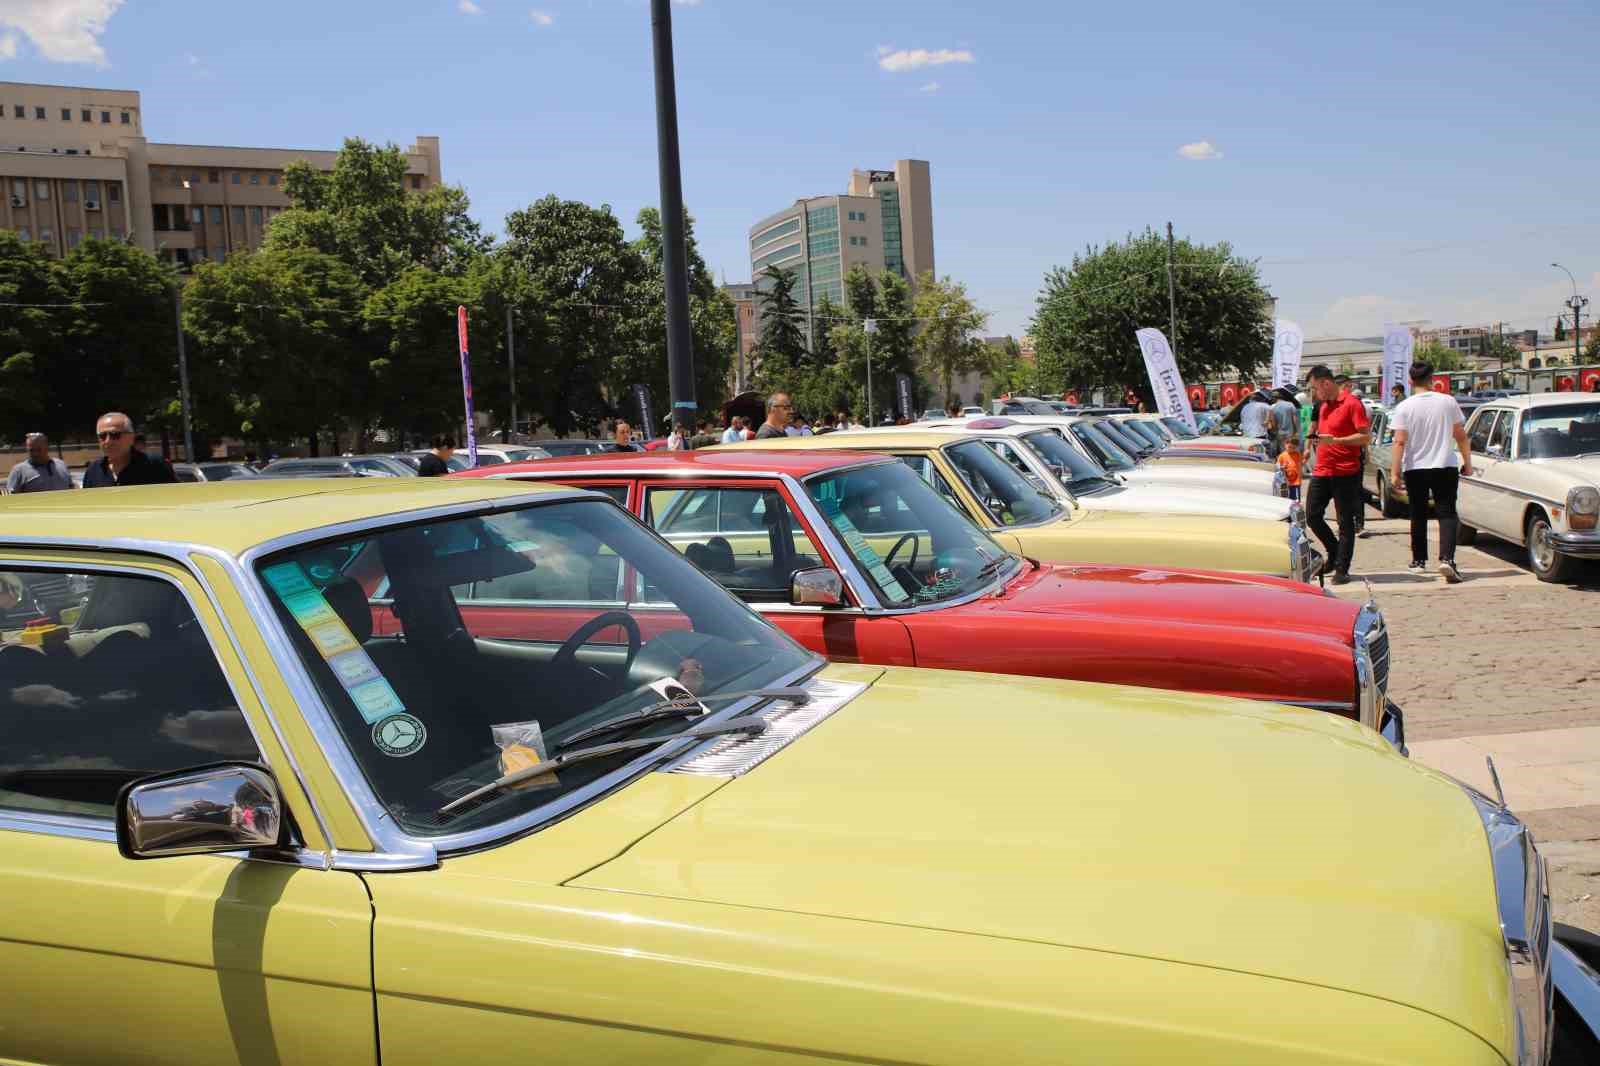 Classic Mercedes Festivali Gaziantep’te yapıldı